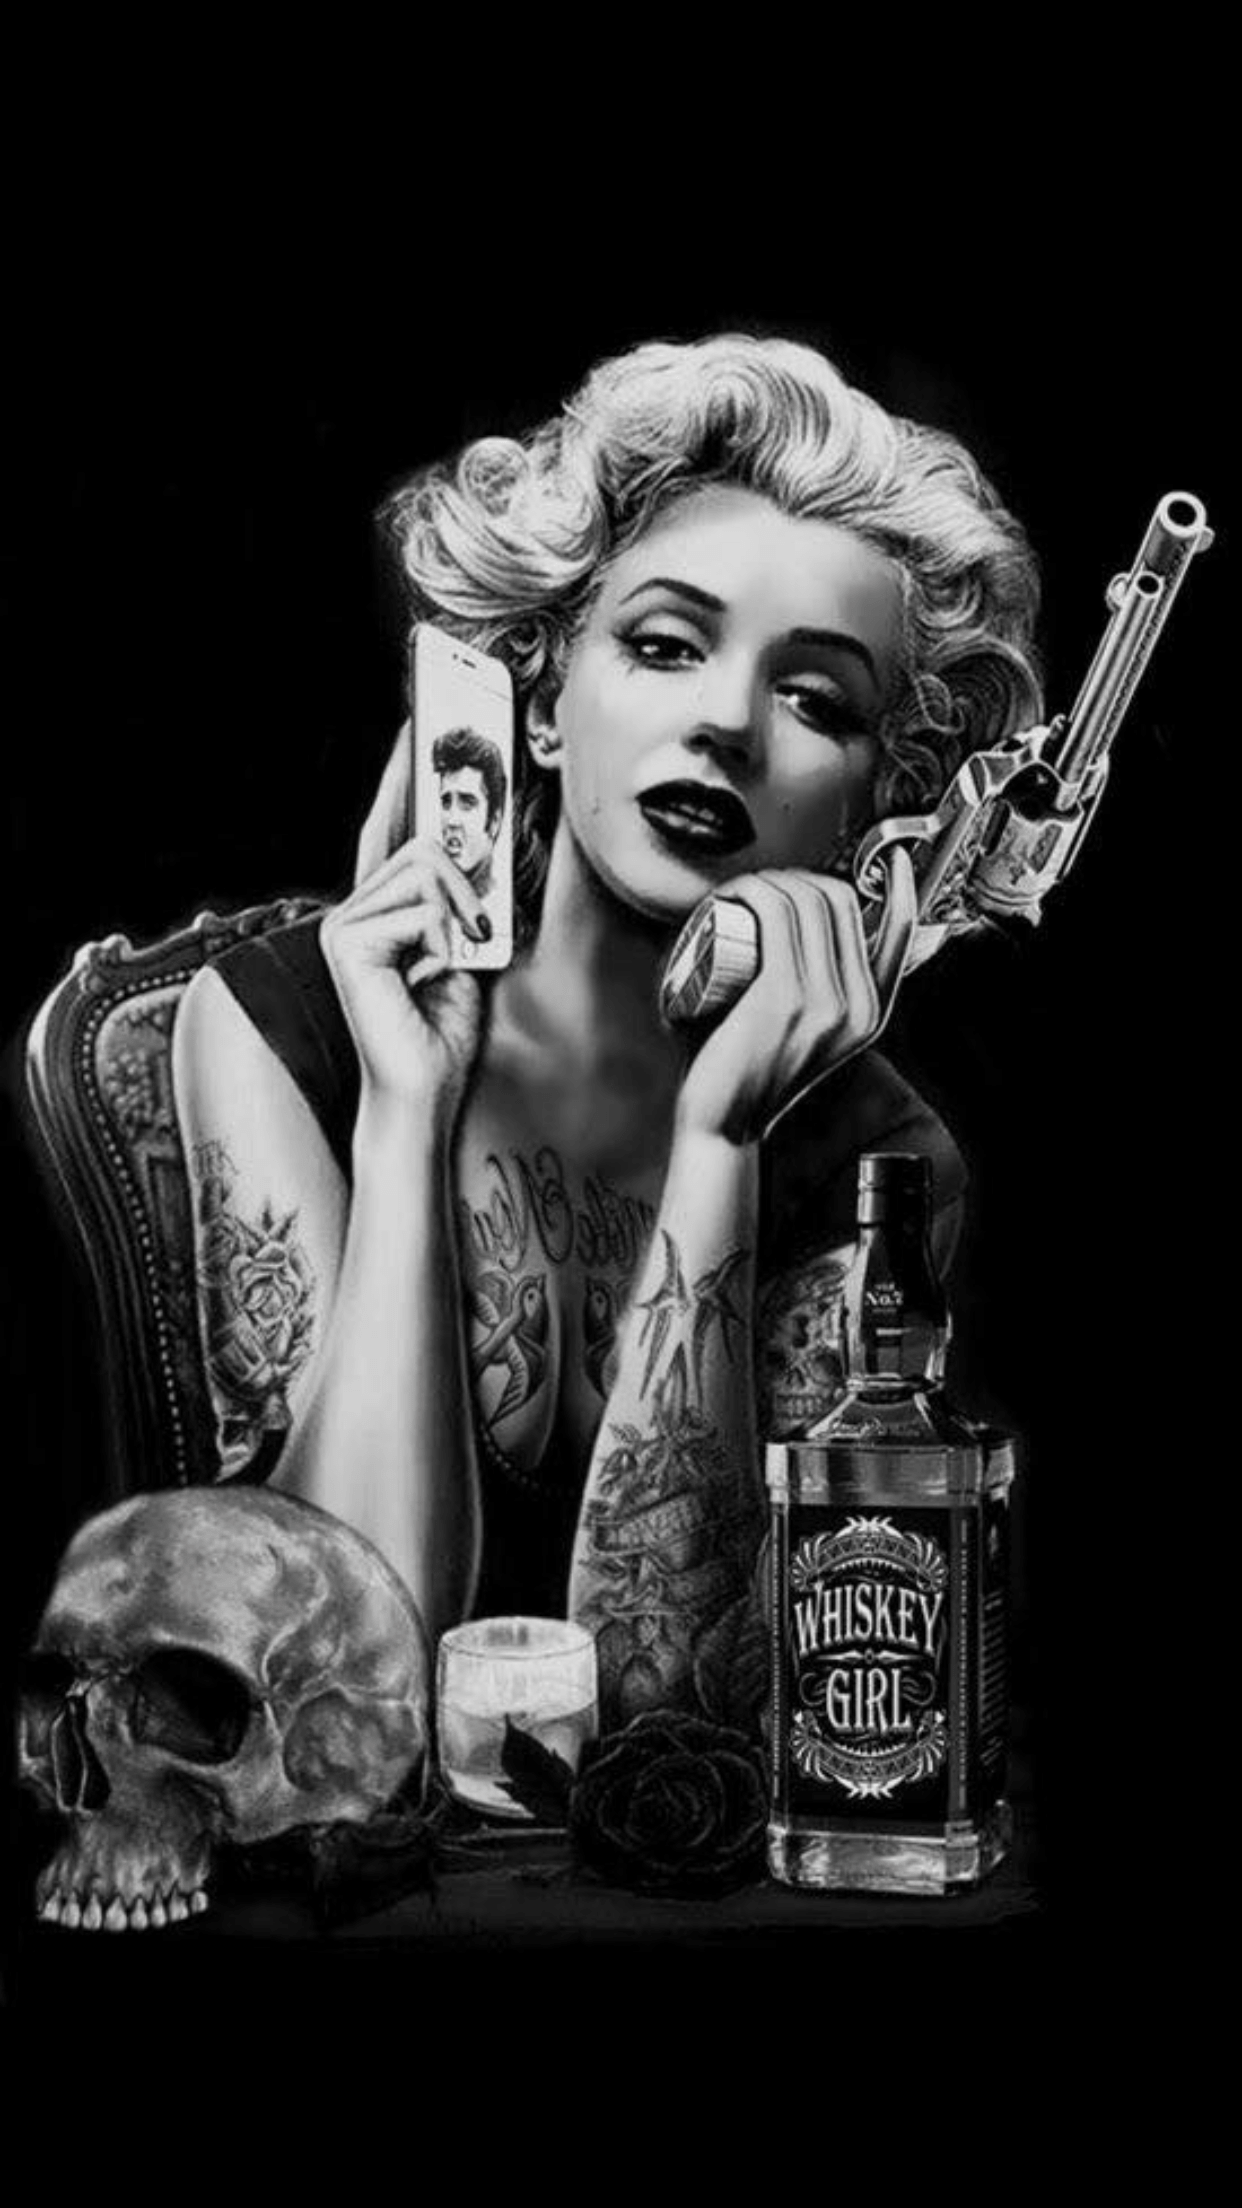 Whiskey girl with skull, gun and whiskey. - Marilyn Monroe